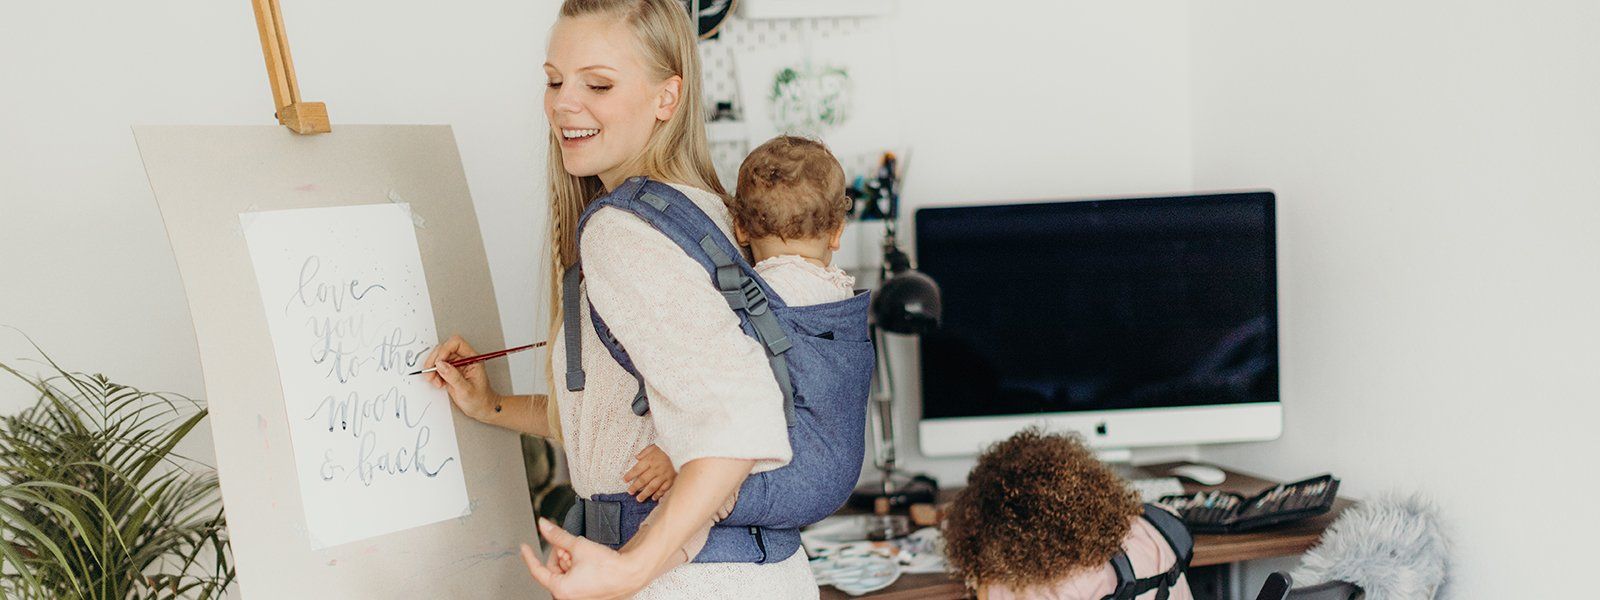 Motherhood & Work: The Process of Balance